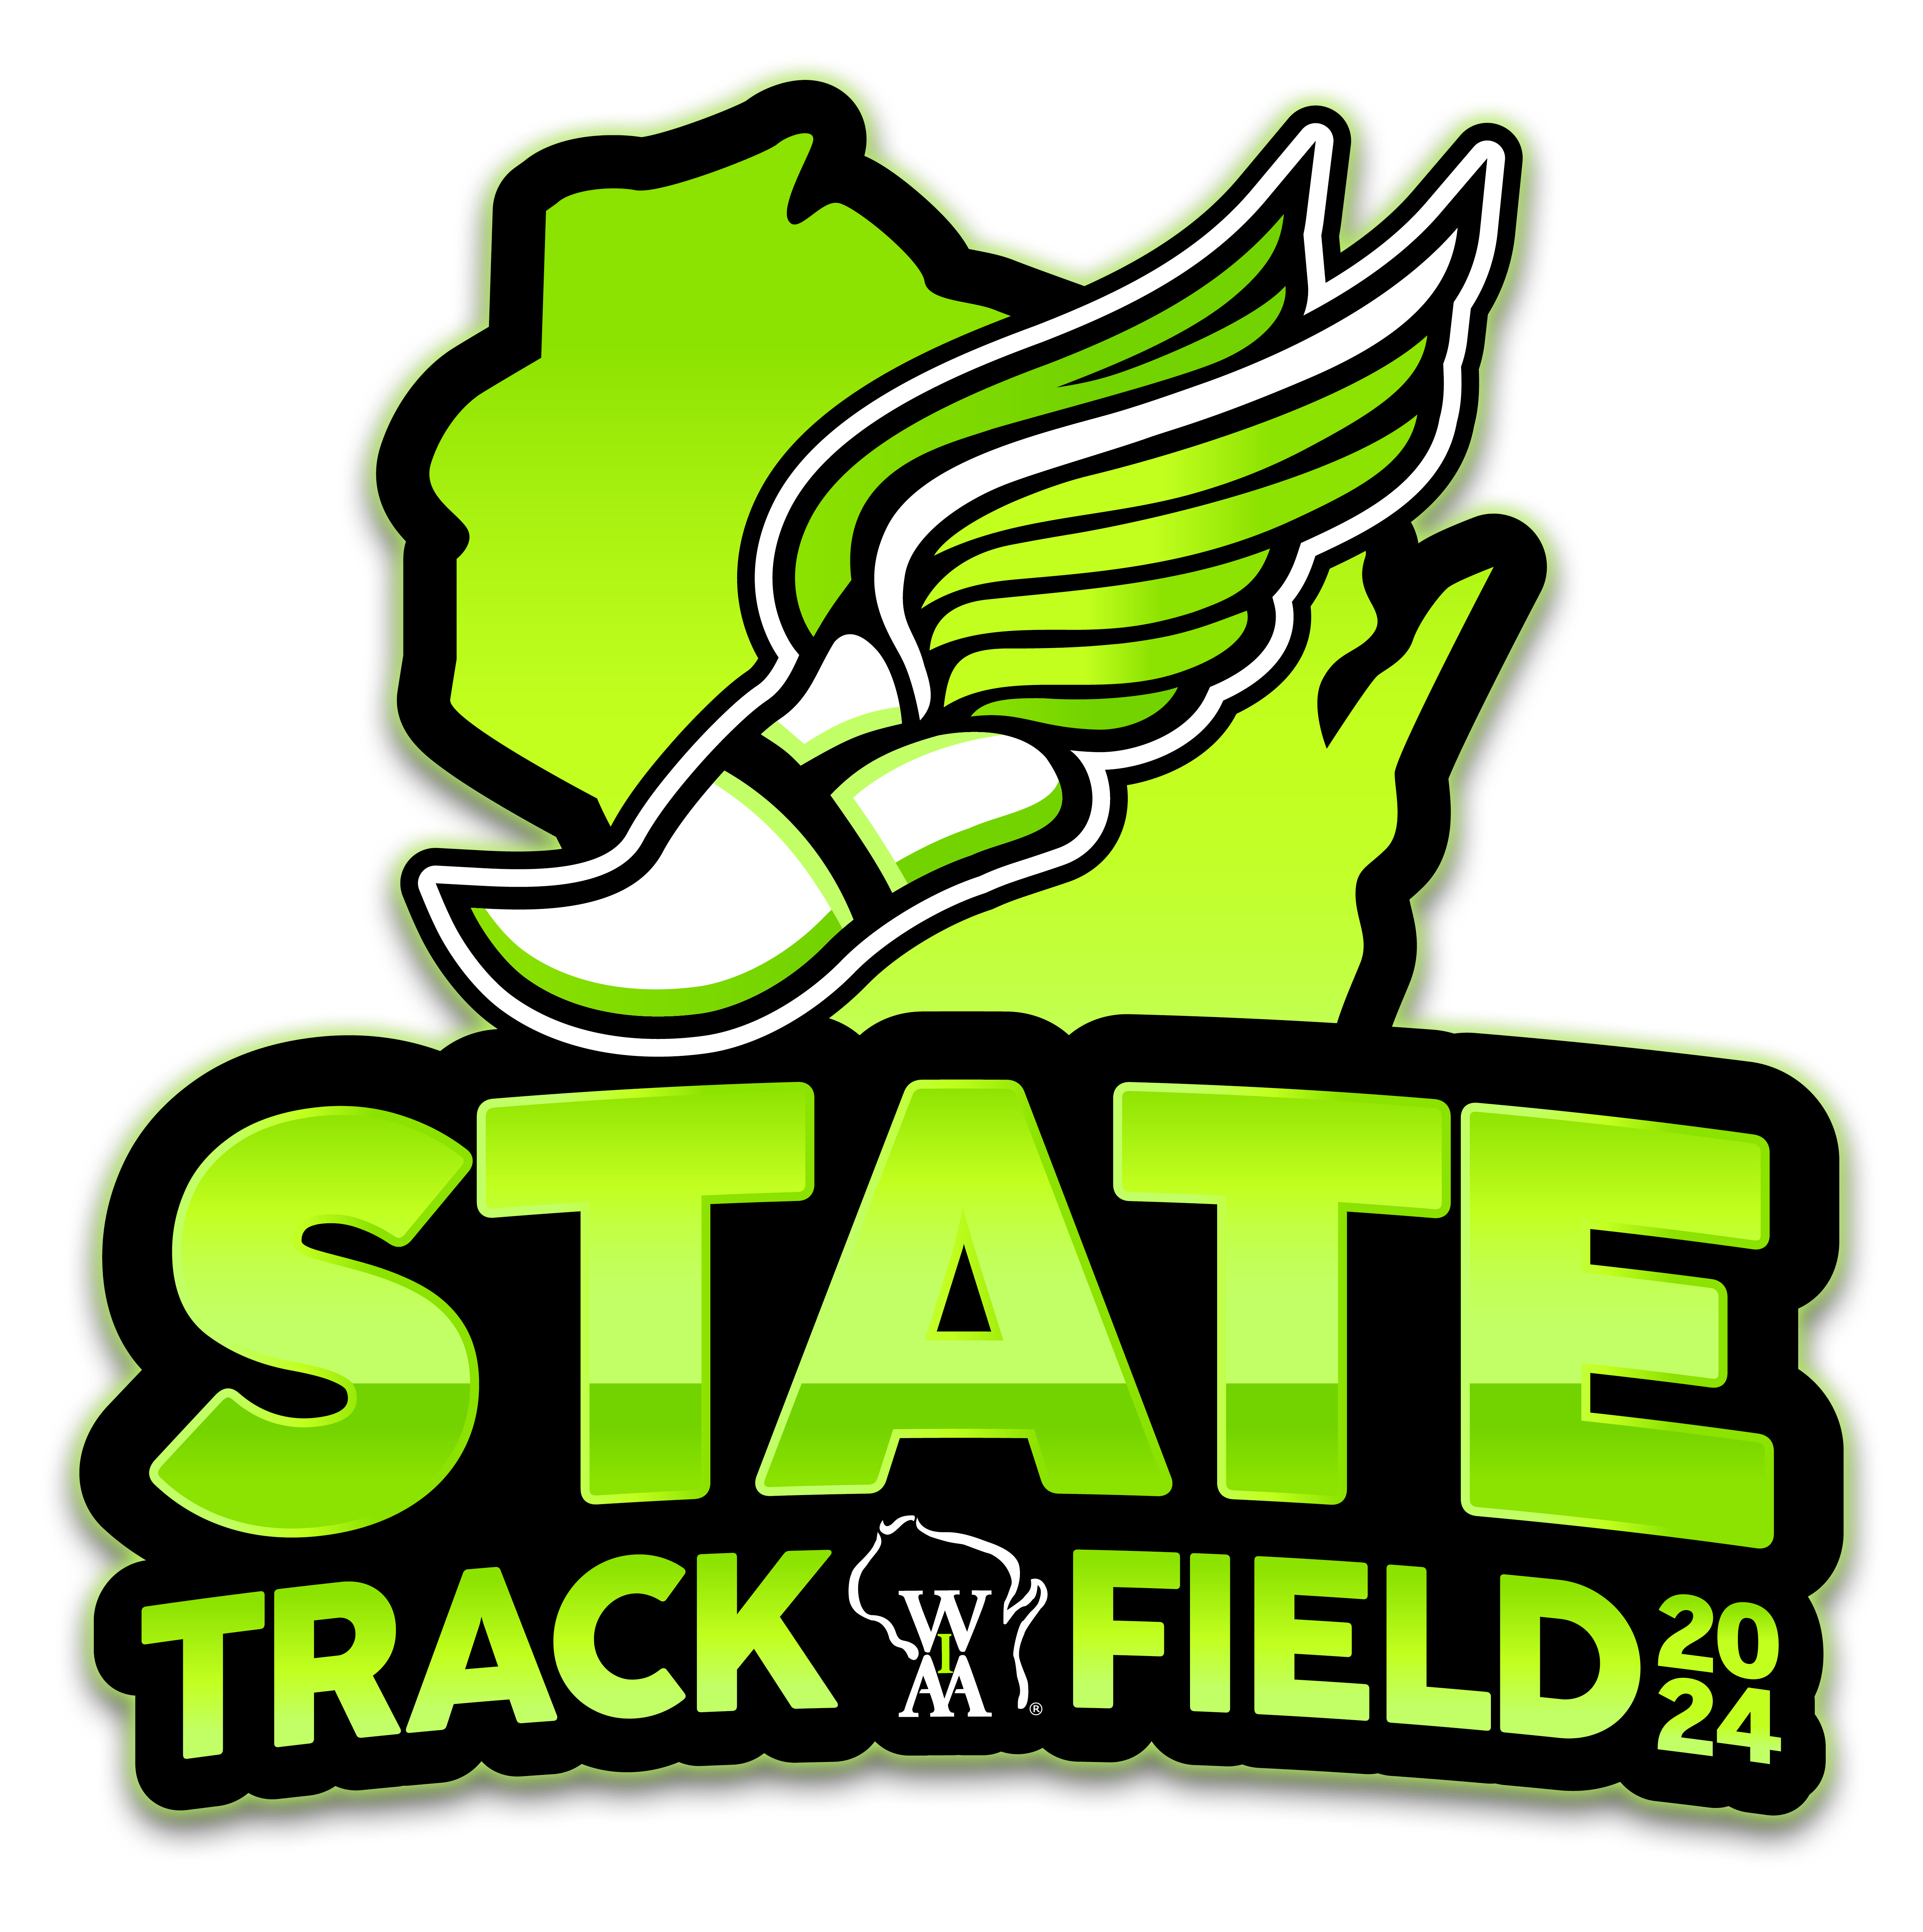 track logo